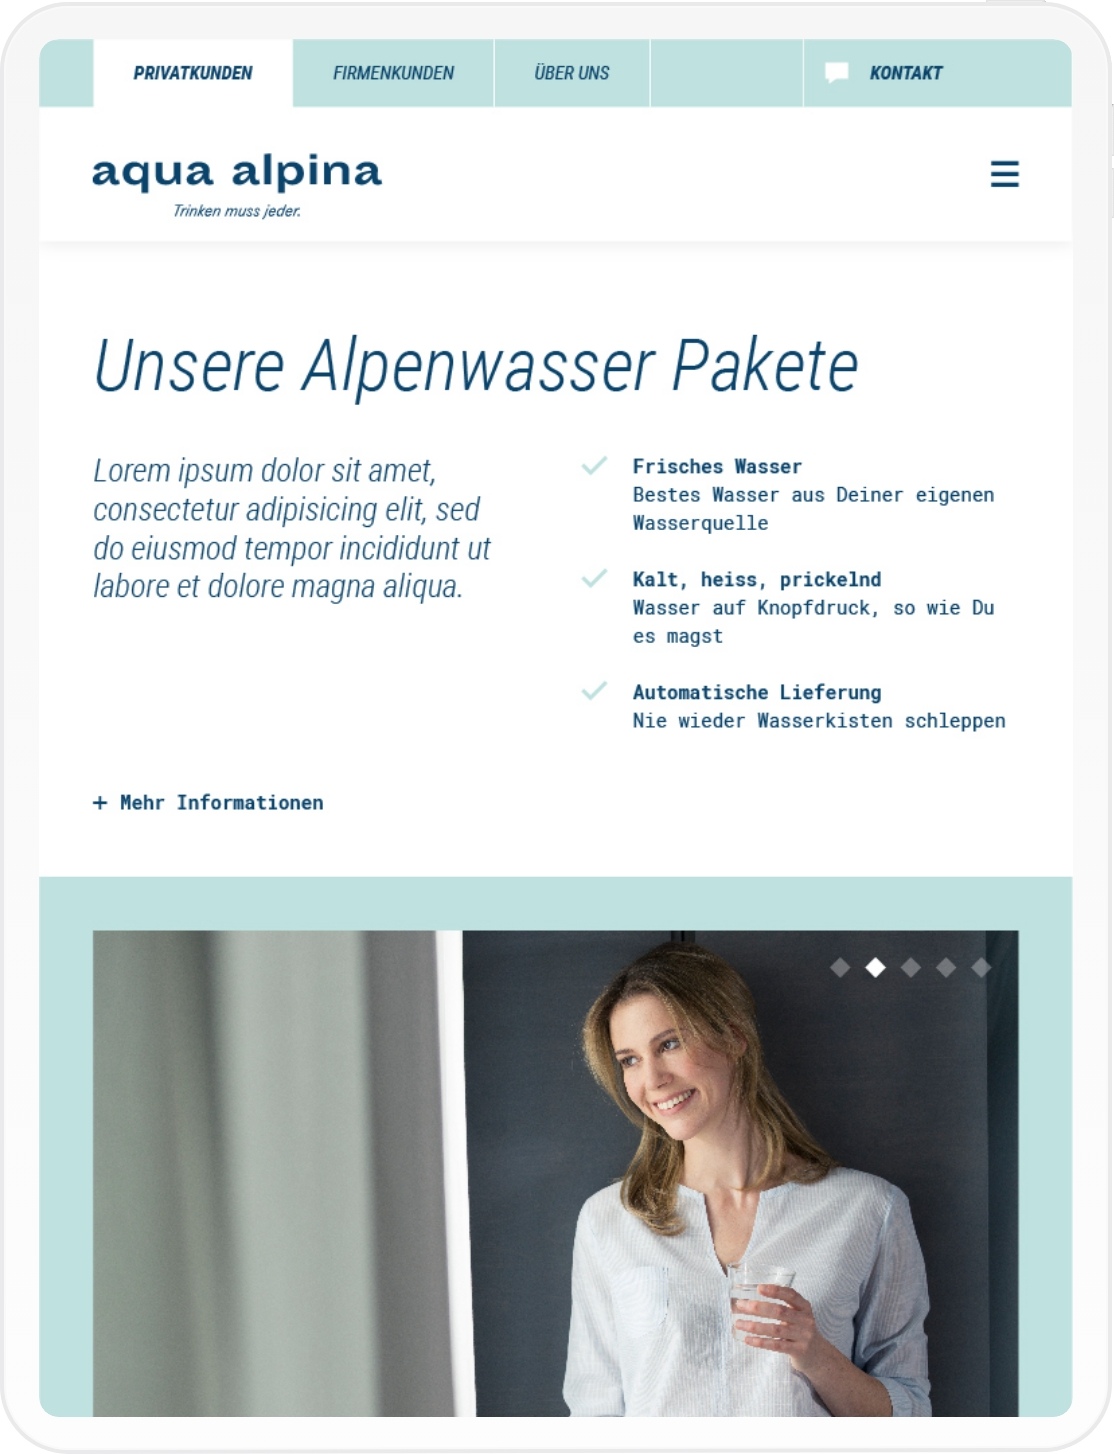 Produktübersicht der Aqua Alpina Website Tablet